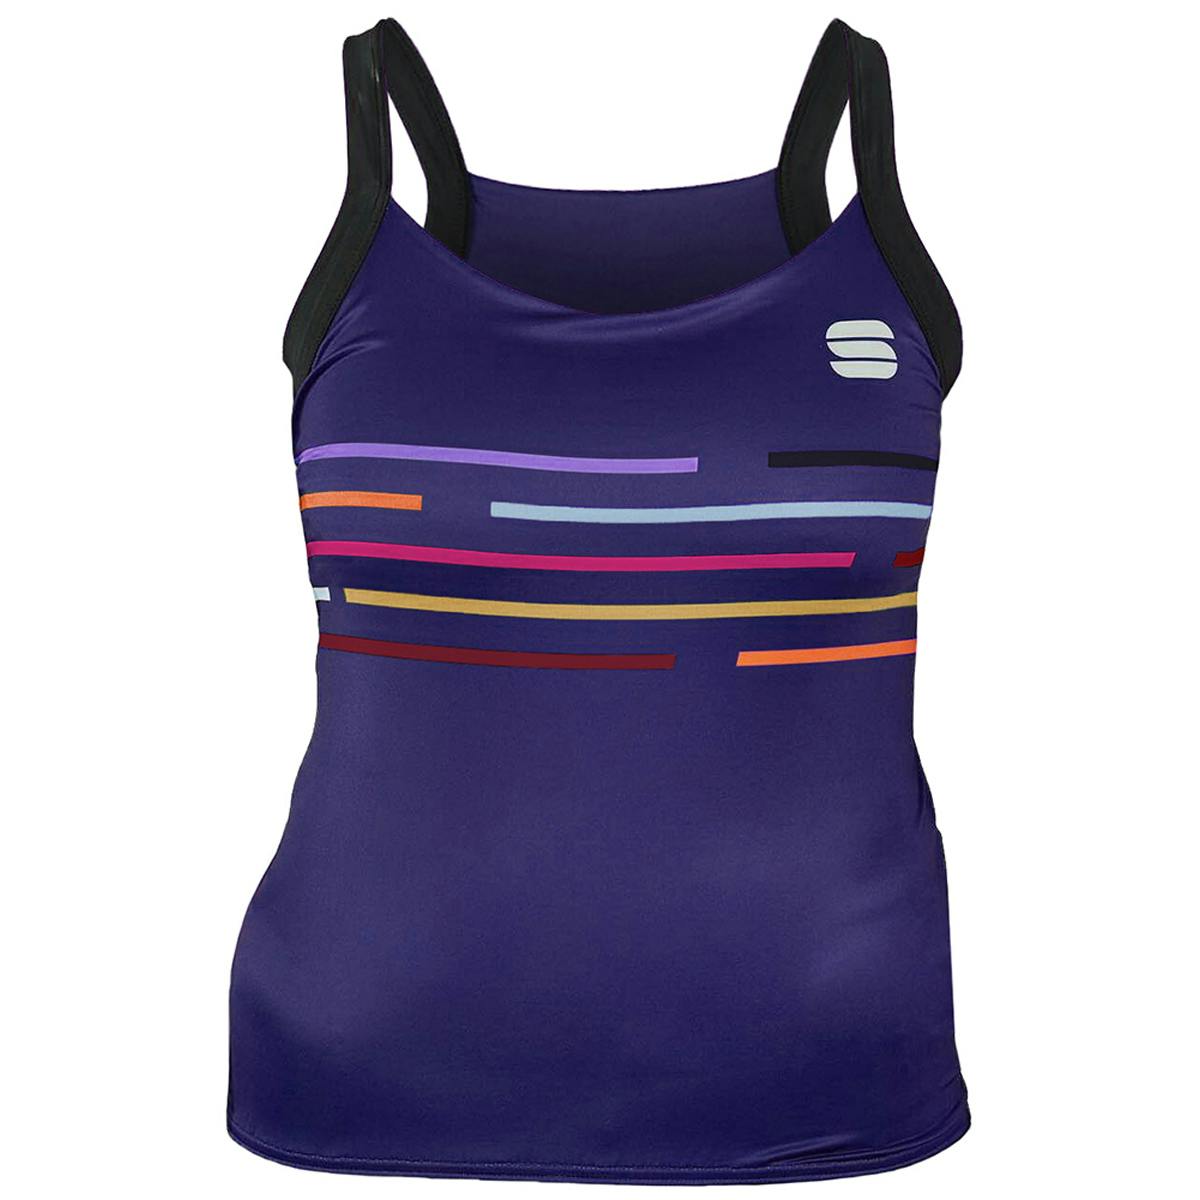 Sportful Vvlodrome Women's Top - Violet - XL